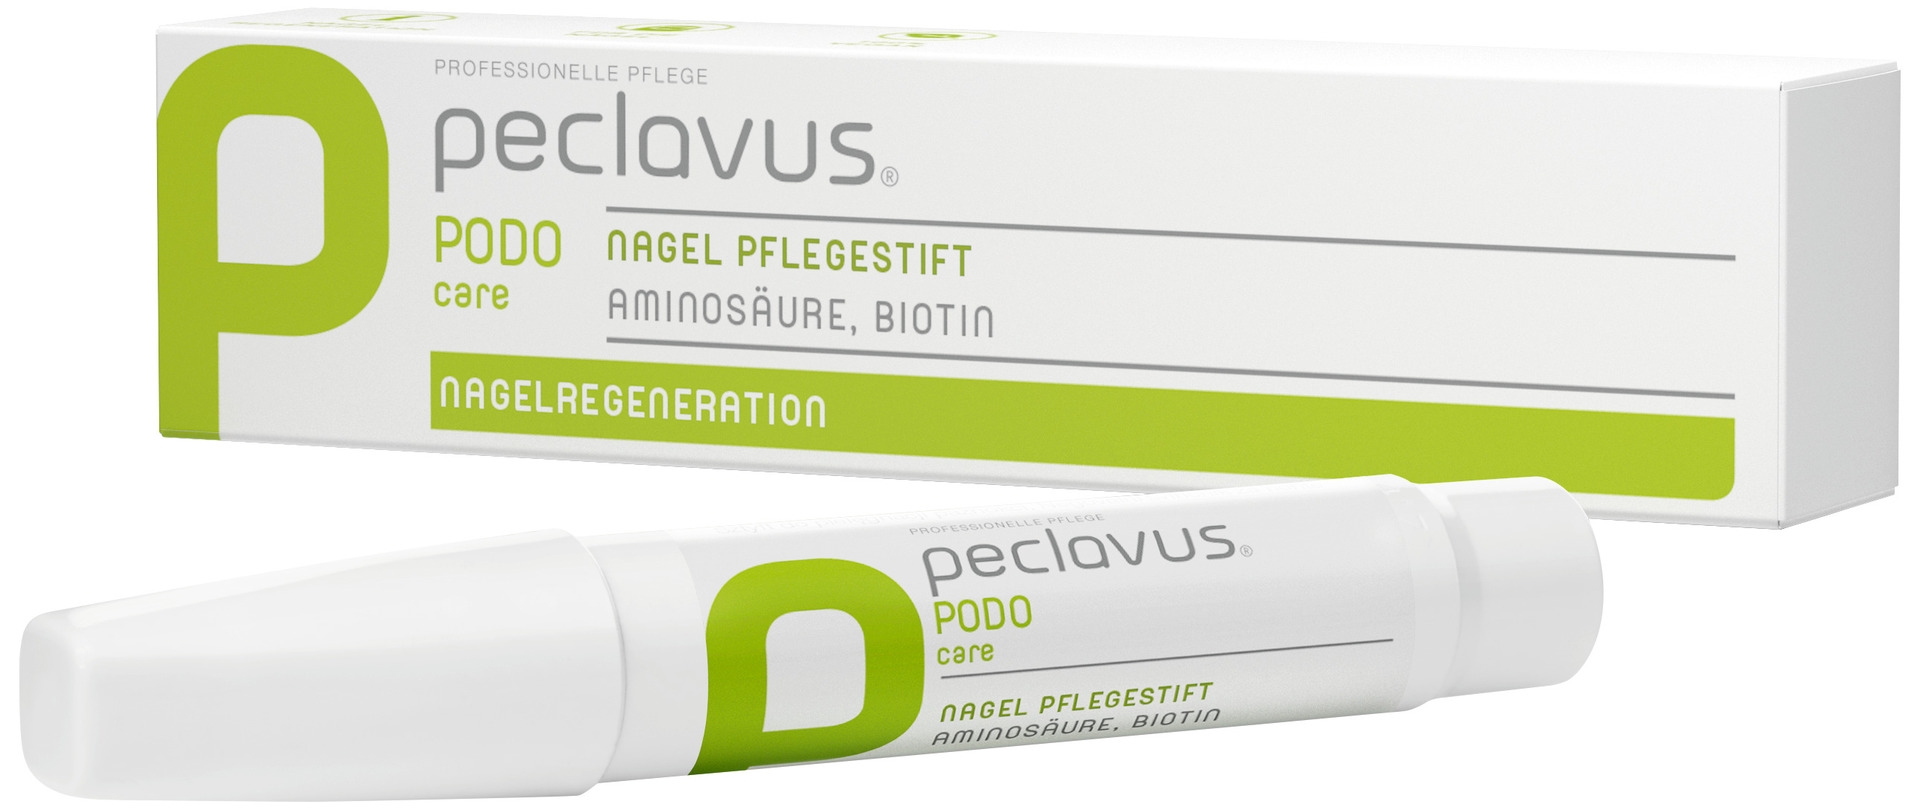 Peclavus PODOcare Nagel Pflegestift | 4 ml